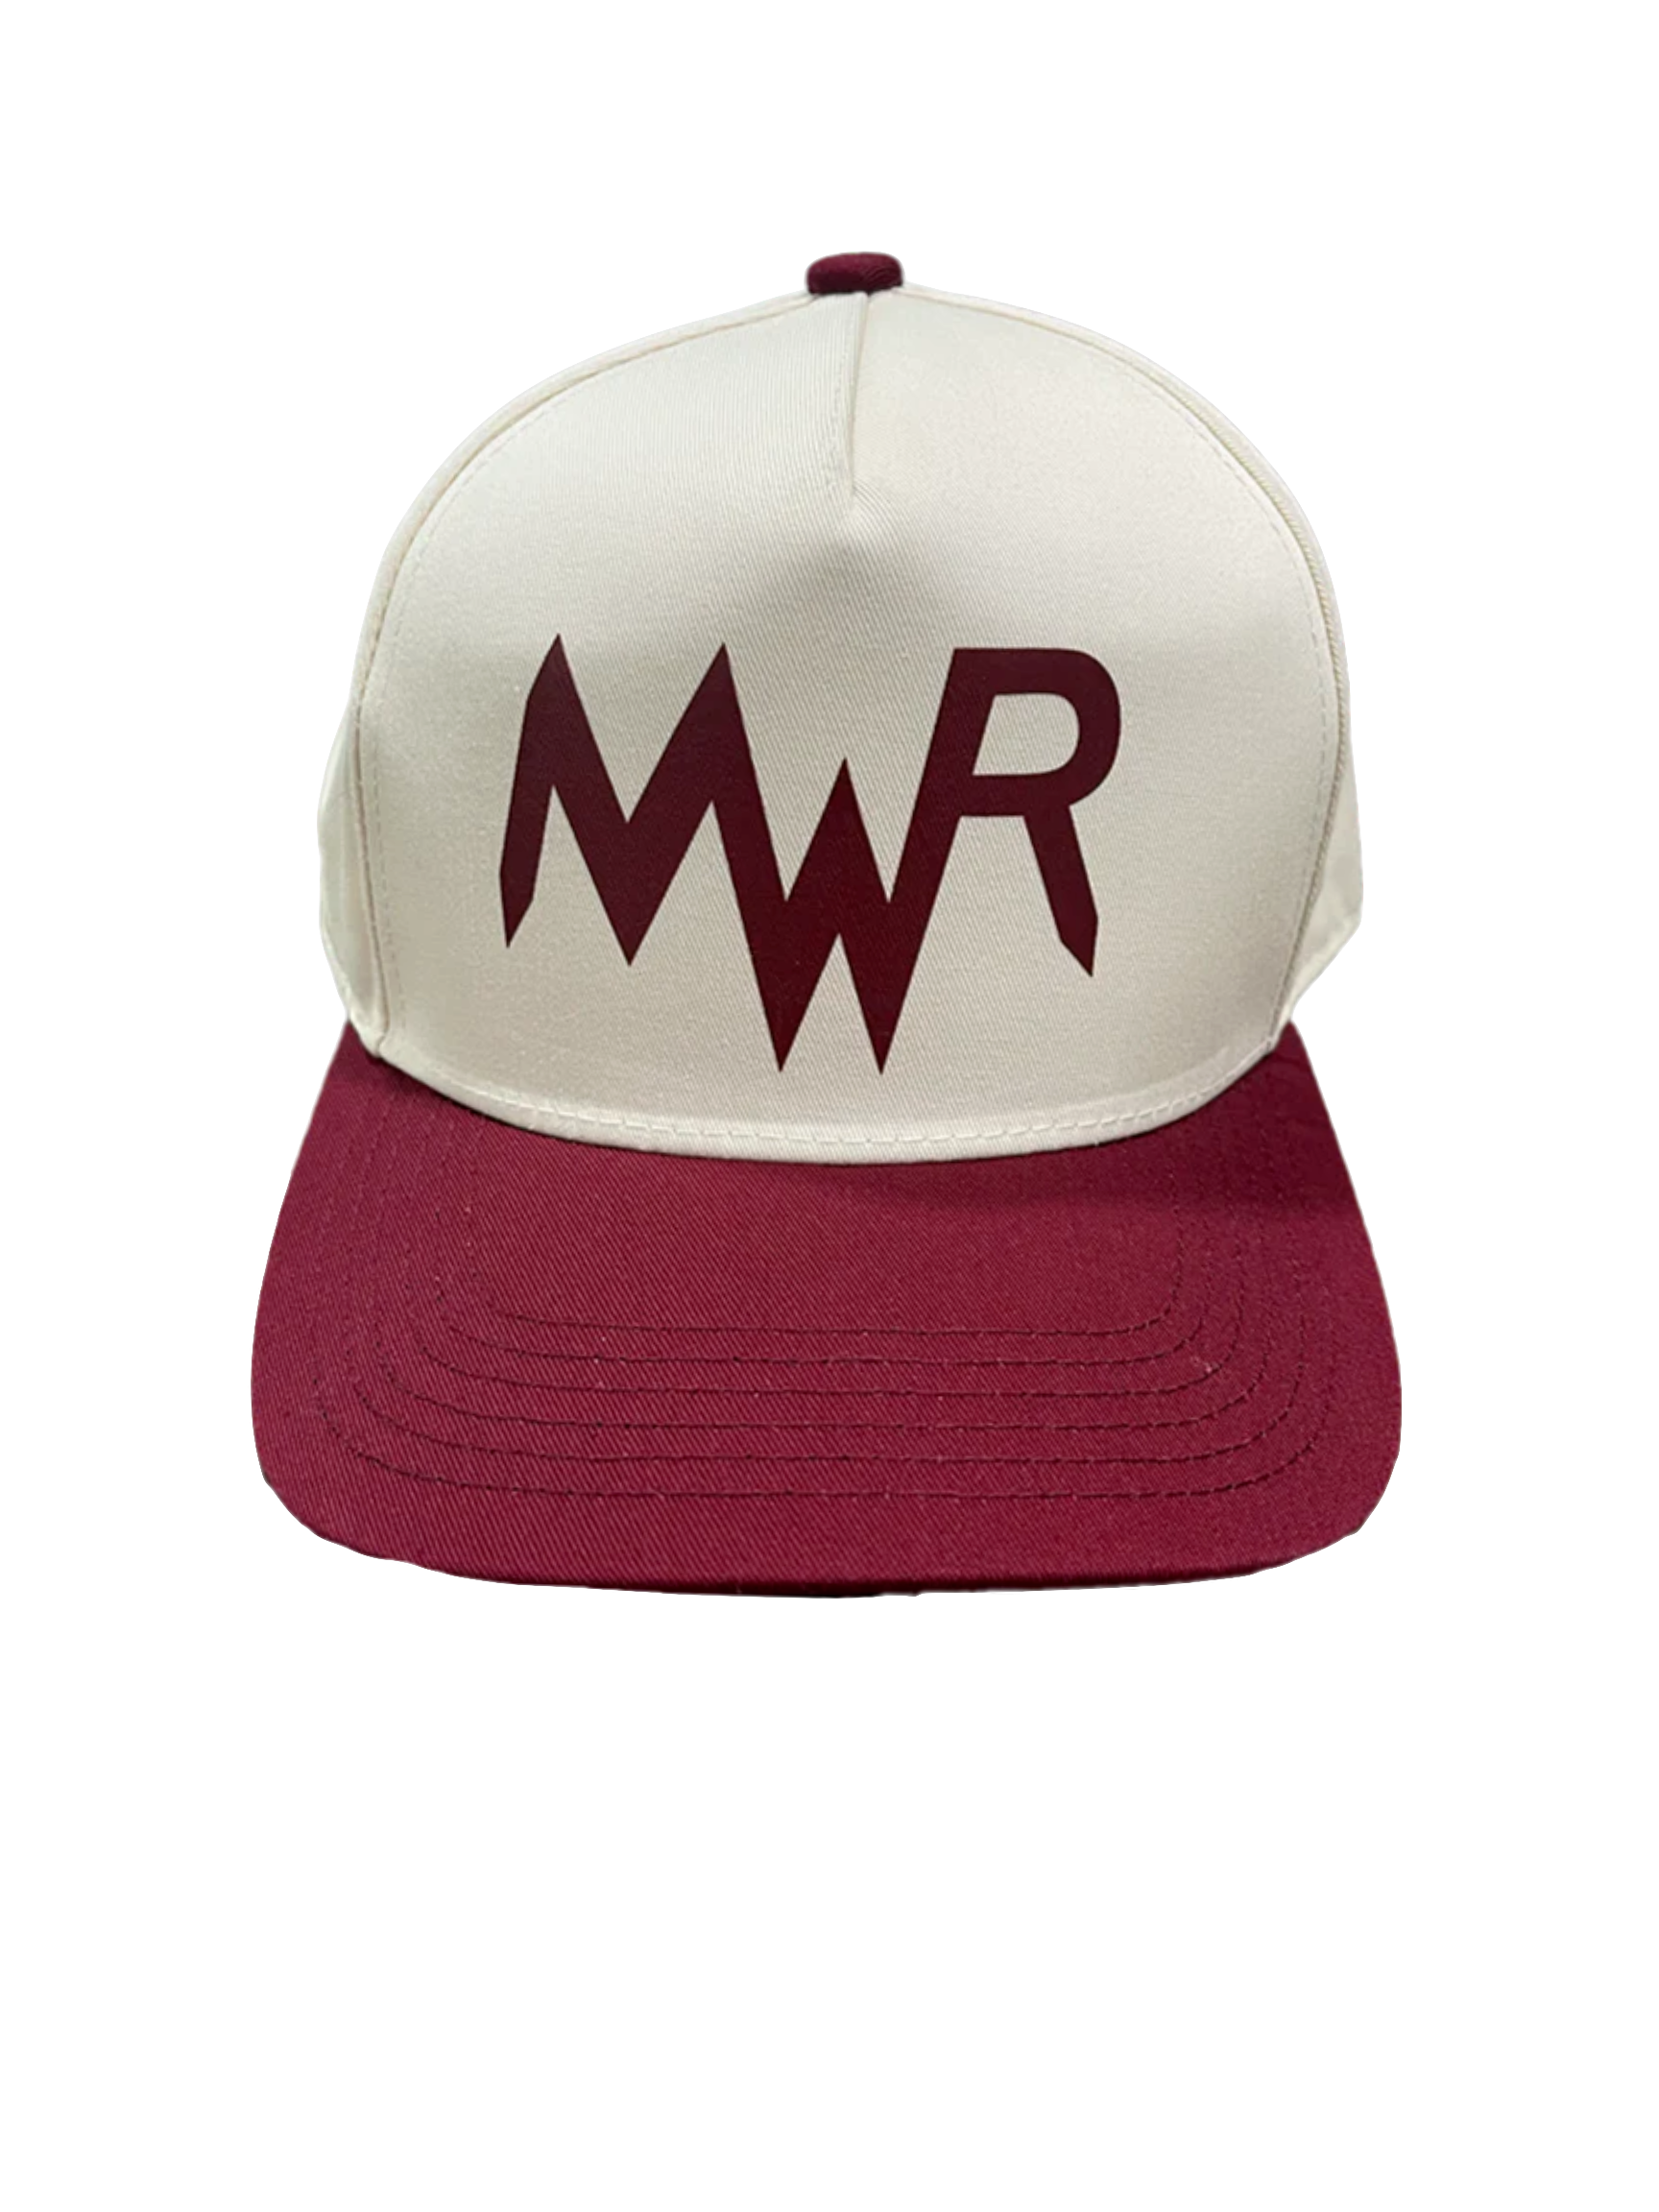 MWR hat